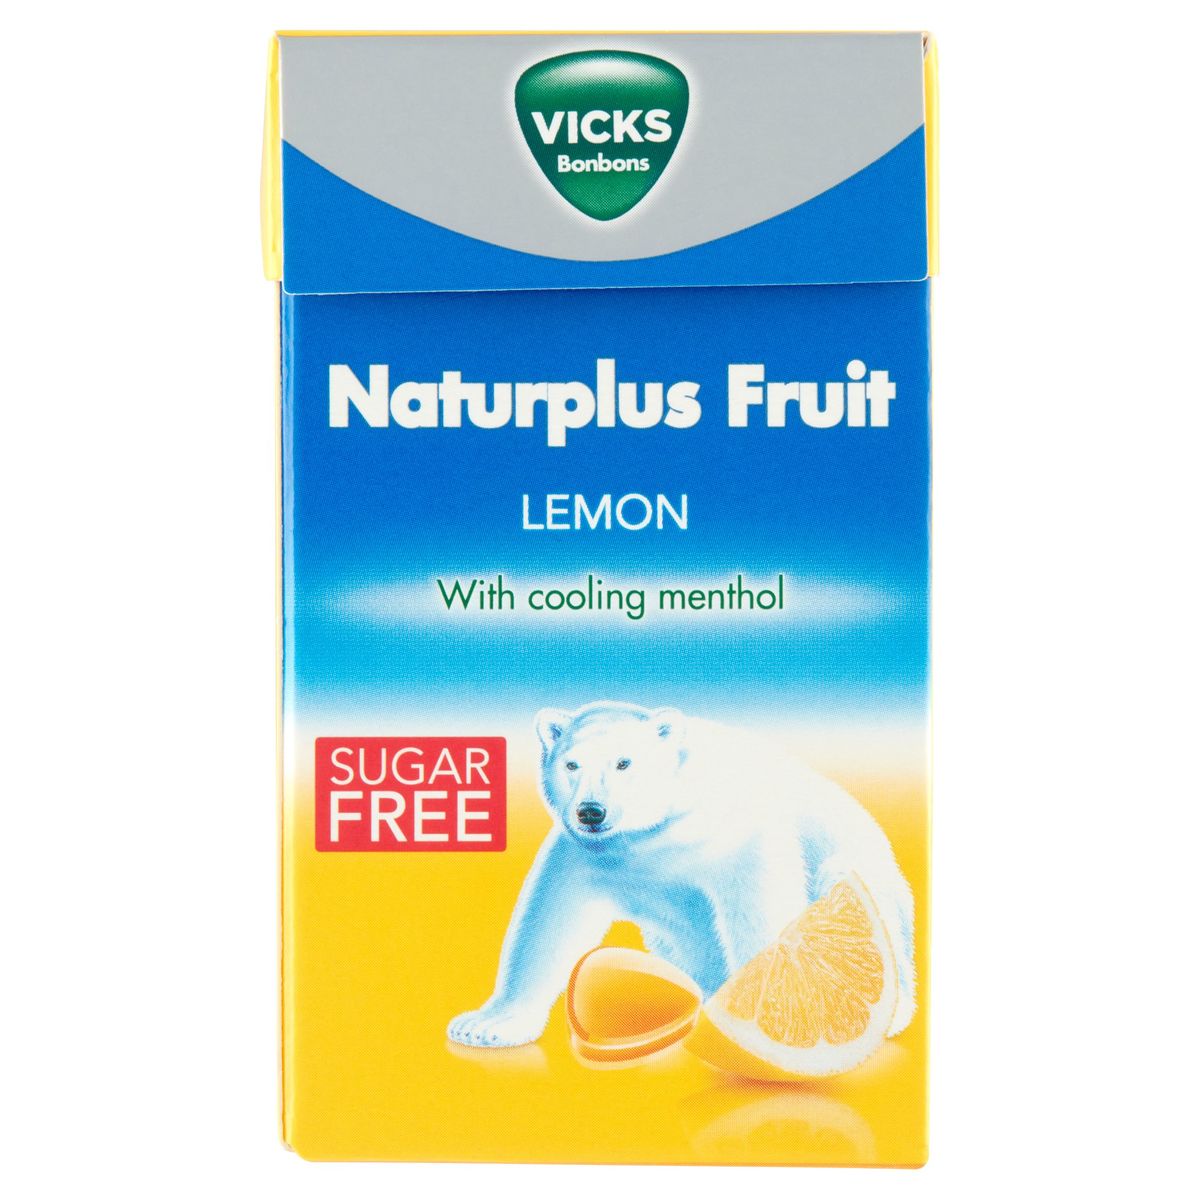 Vicks Bonbons Naturplus Fruit Lemon Sugar Free 40 g